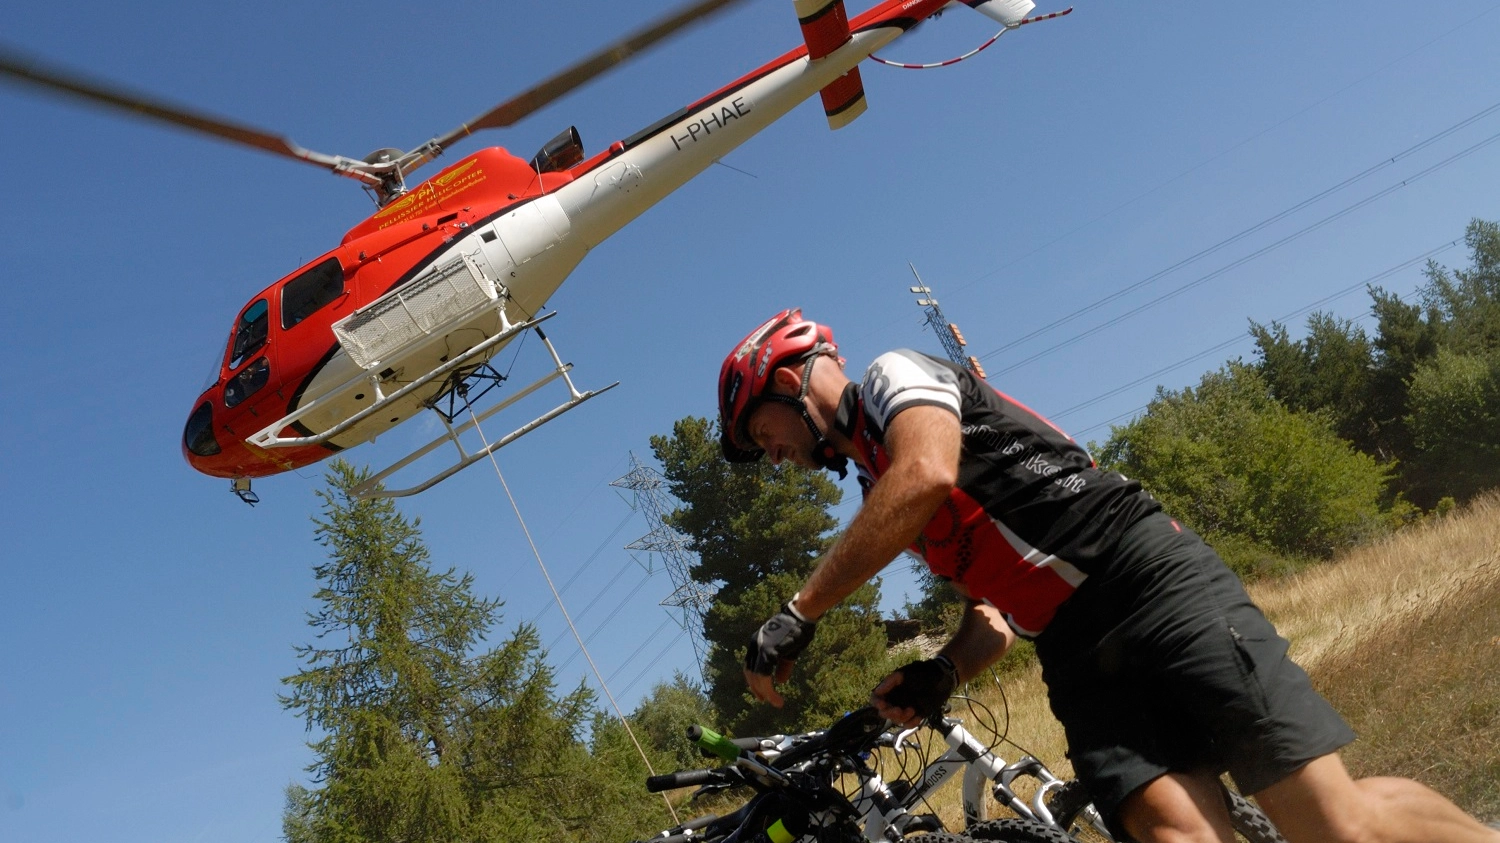 Courmayeur, in elicottero poi giù in bici